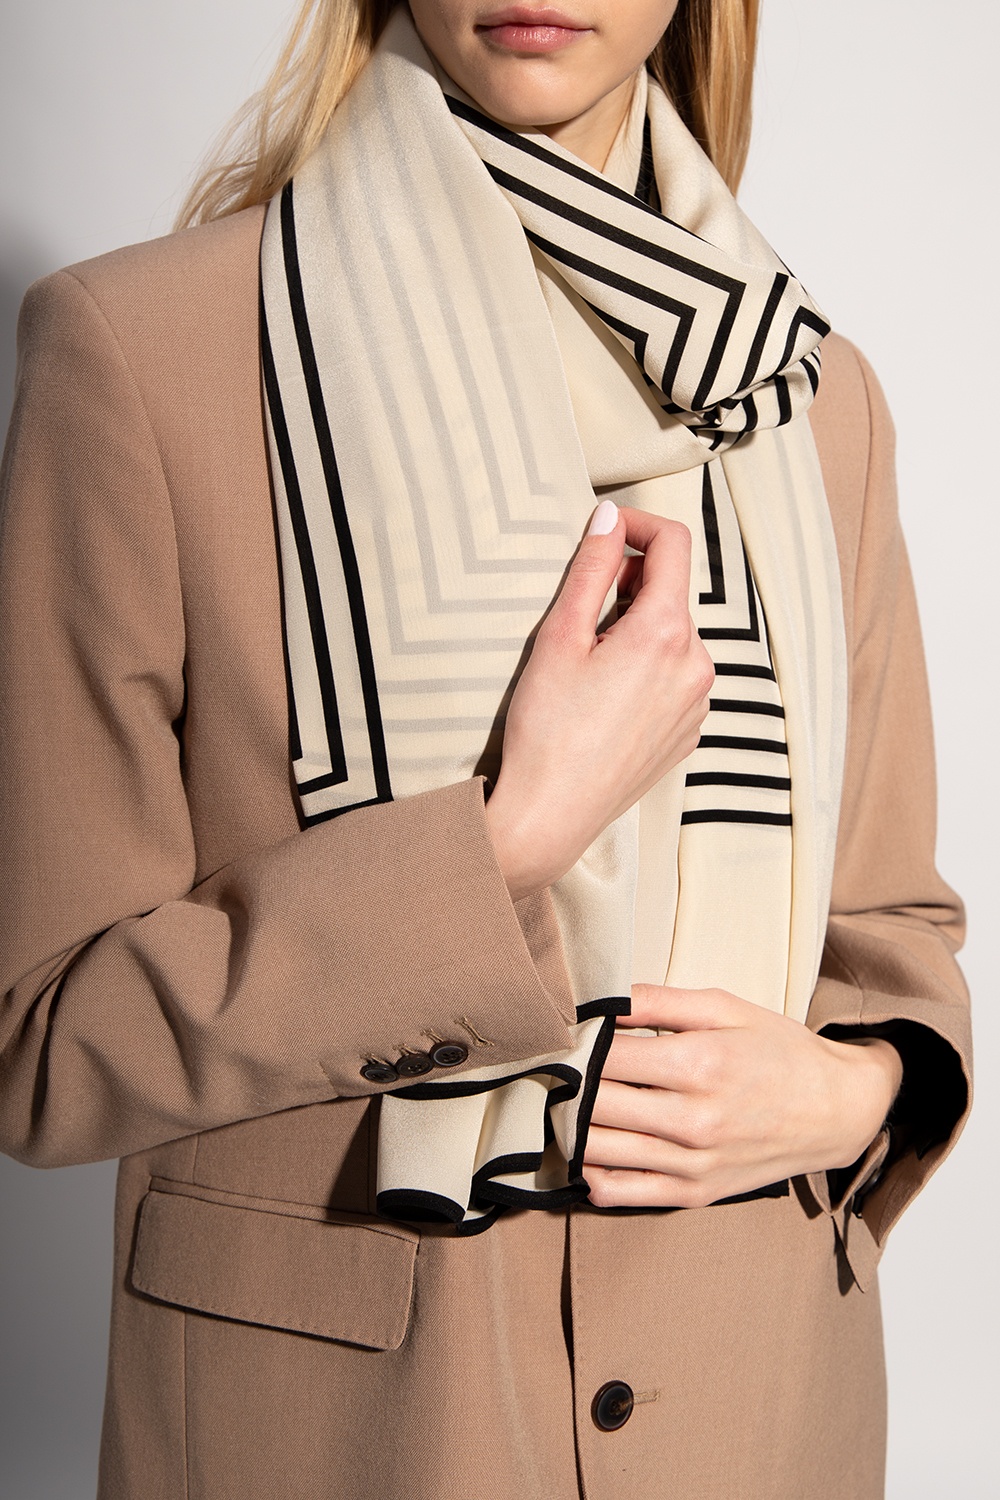 TOTEME Silk scarf, Women's Accessories